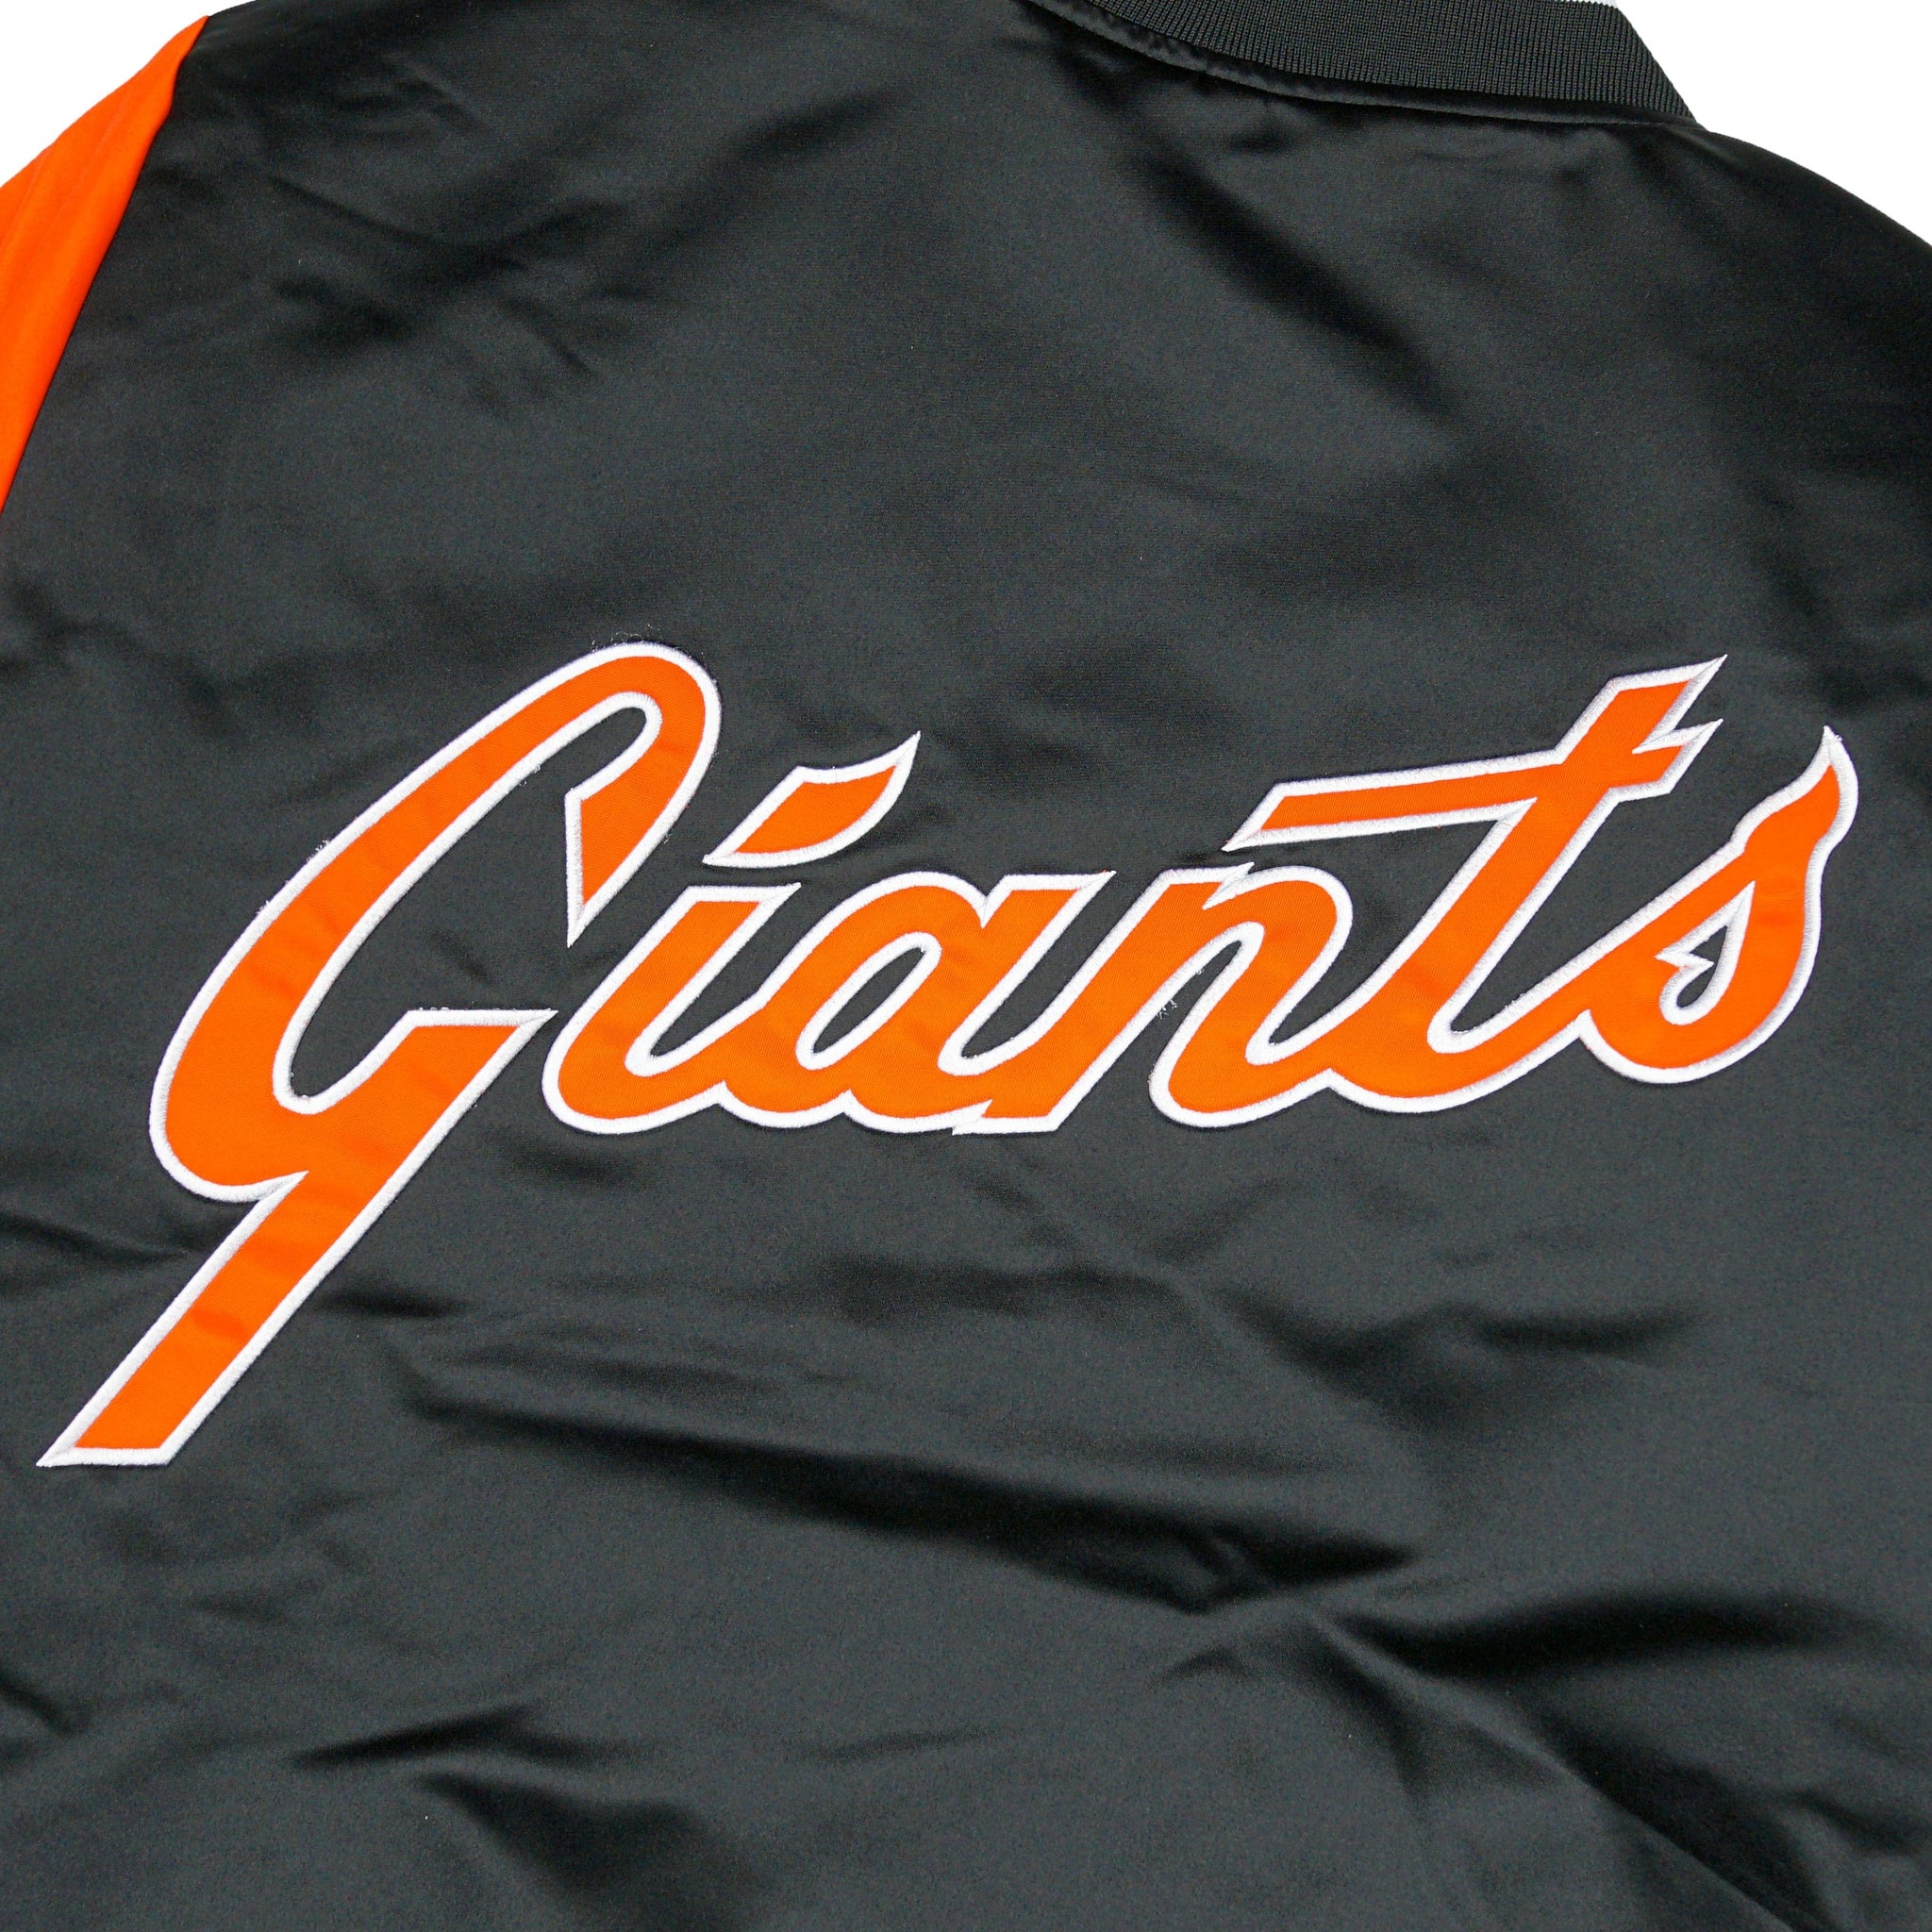 San Francisco Giants Heavyweight Satin Jacket in black